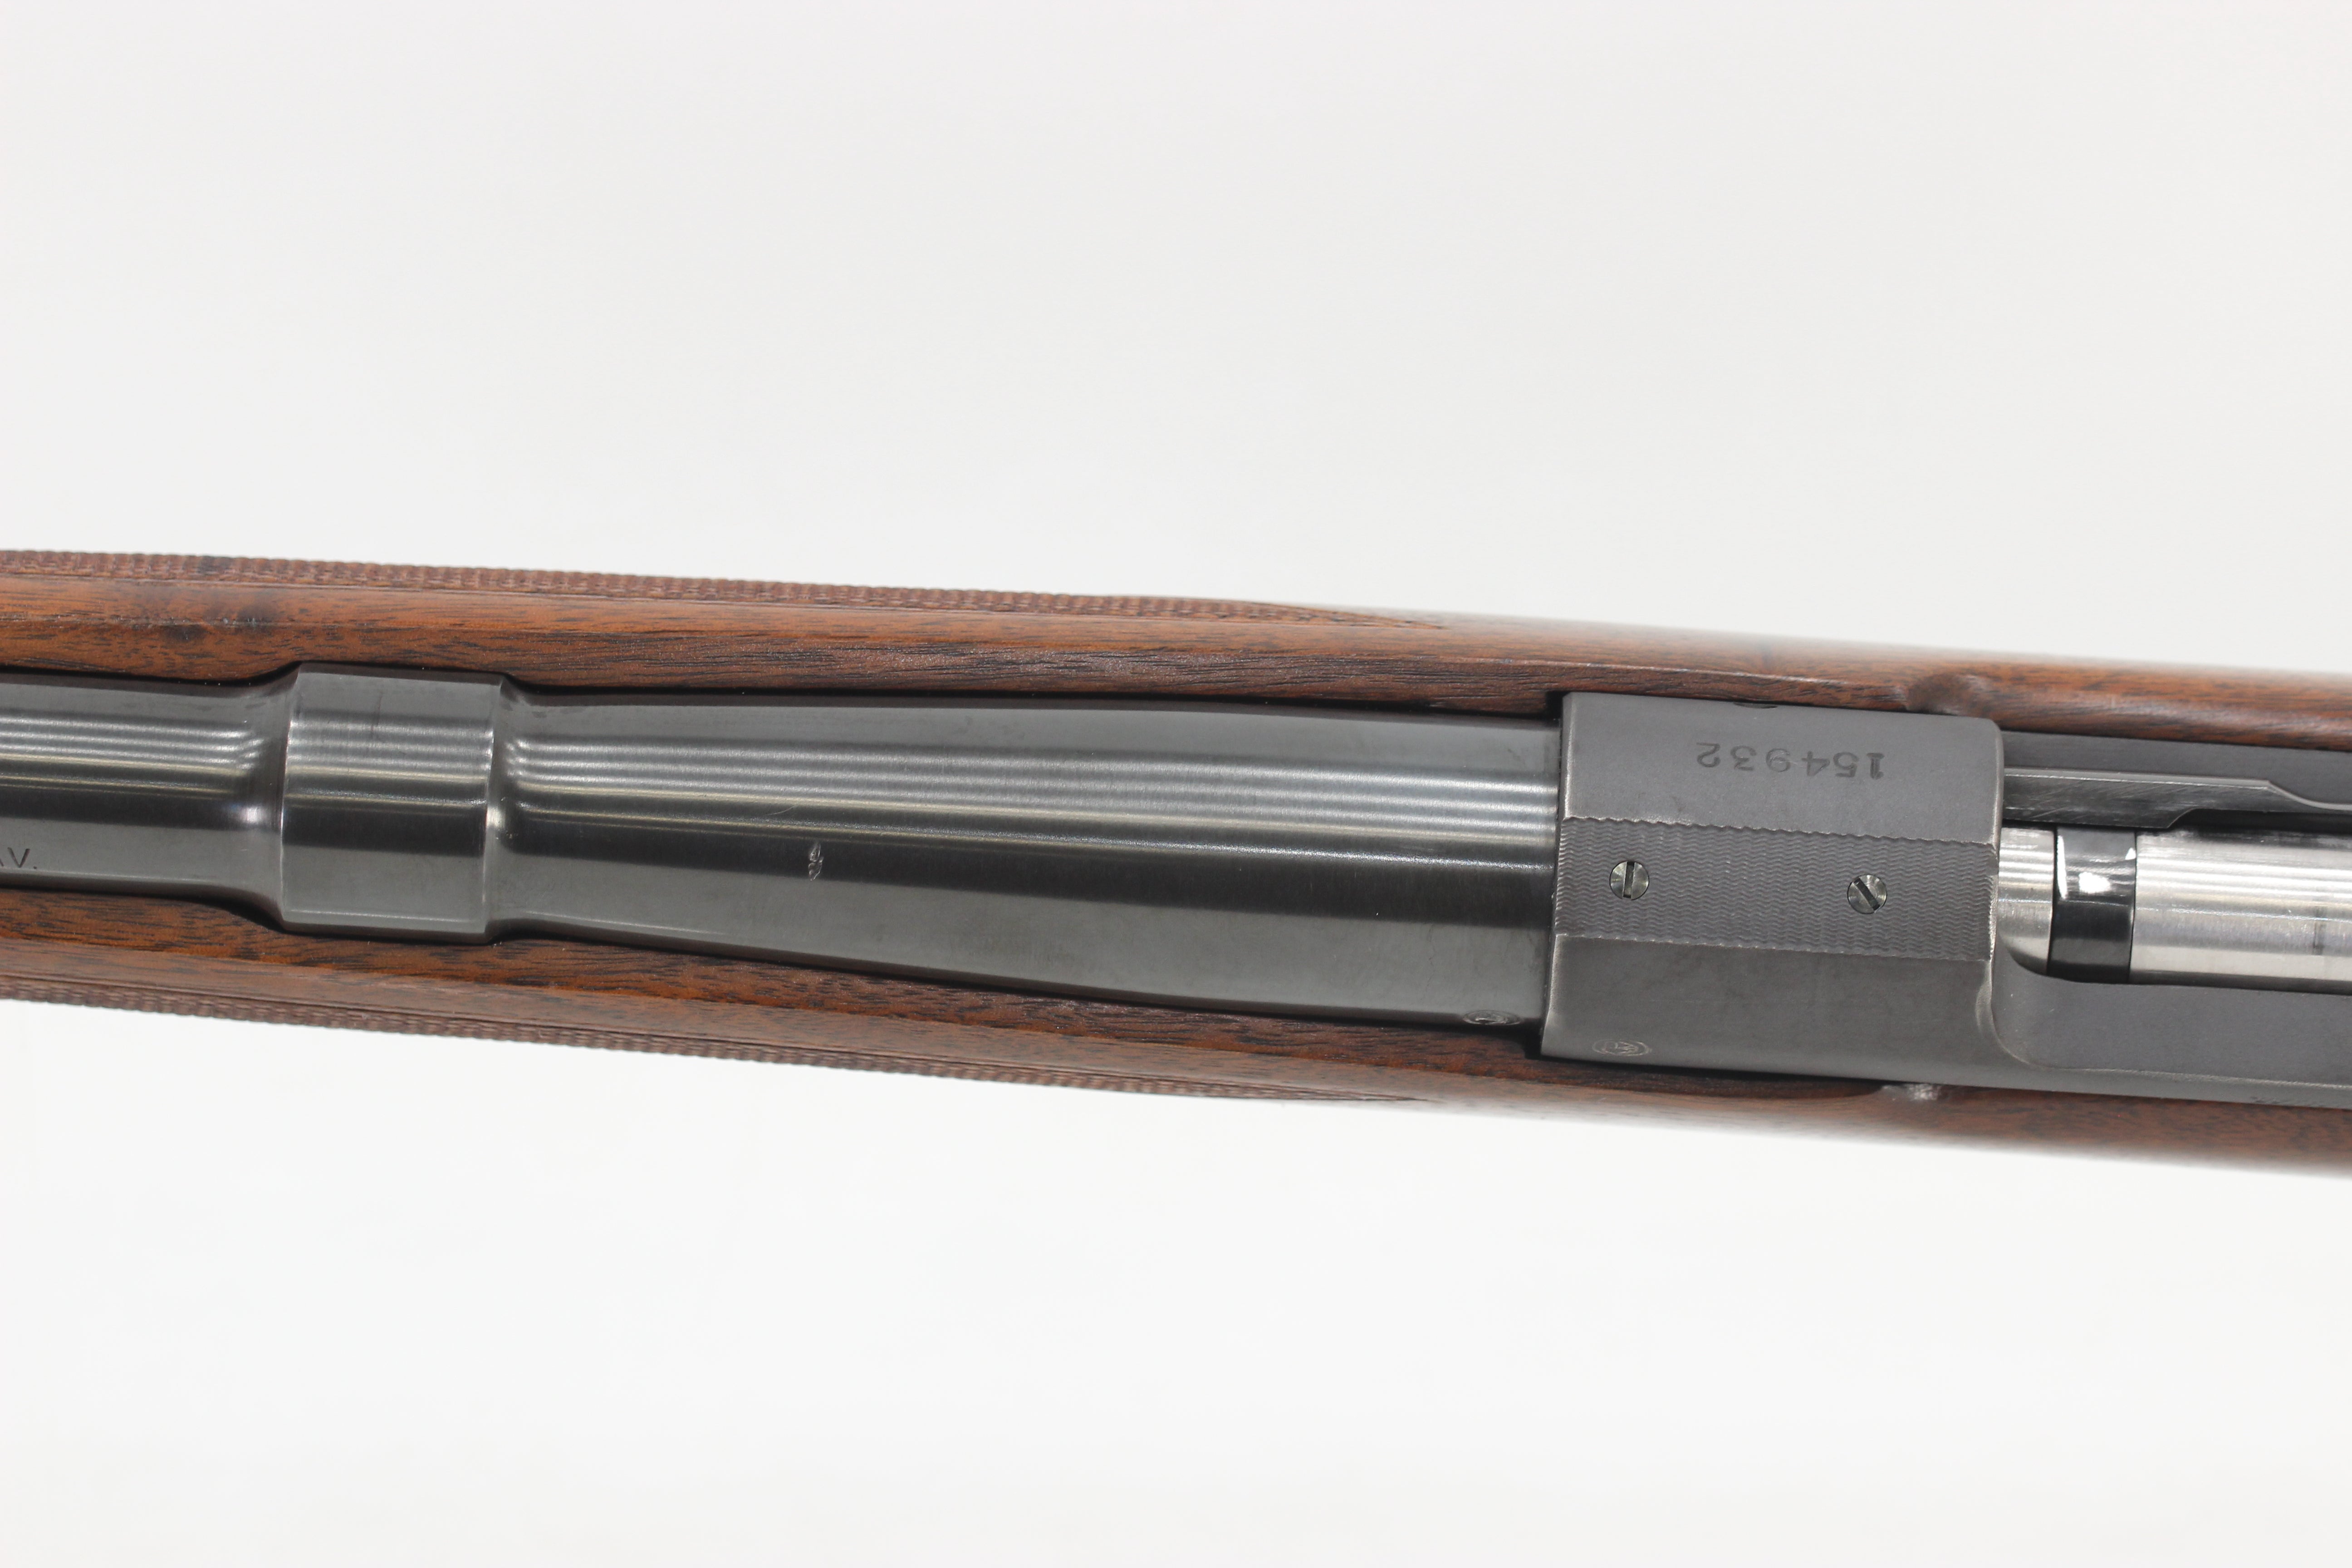 .250-3000 Savage Sightless Standard Tribute Rifle - 1950